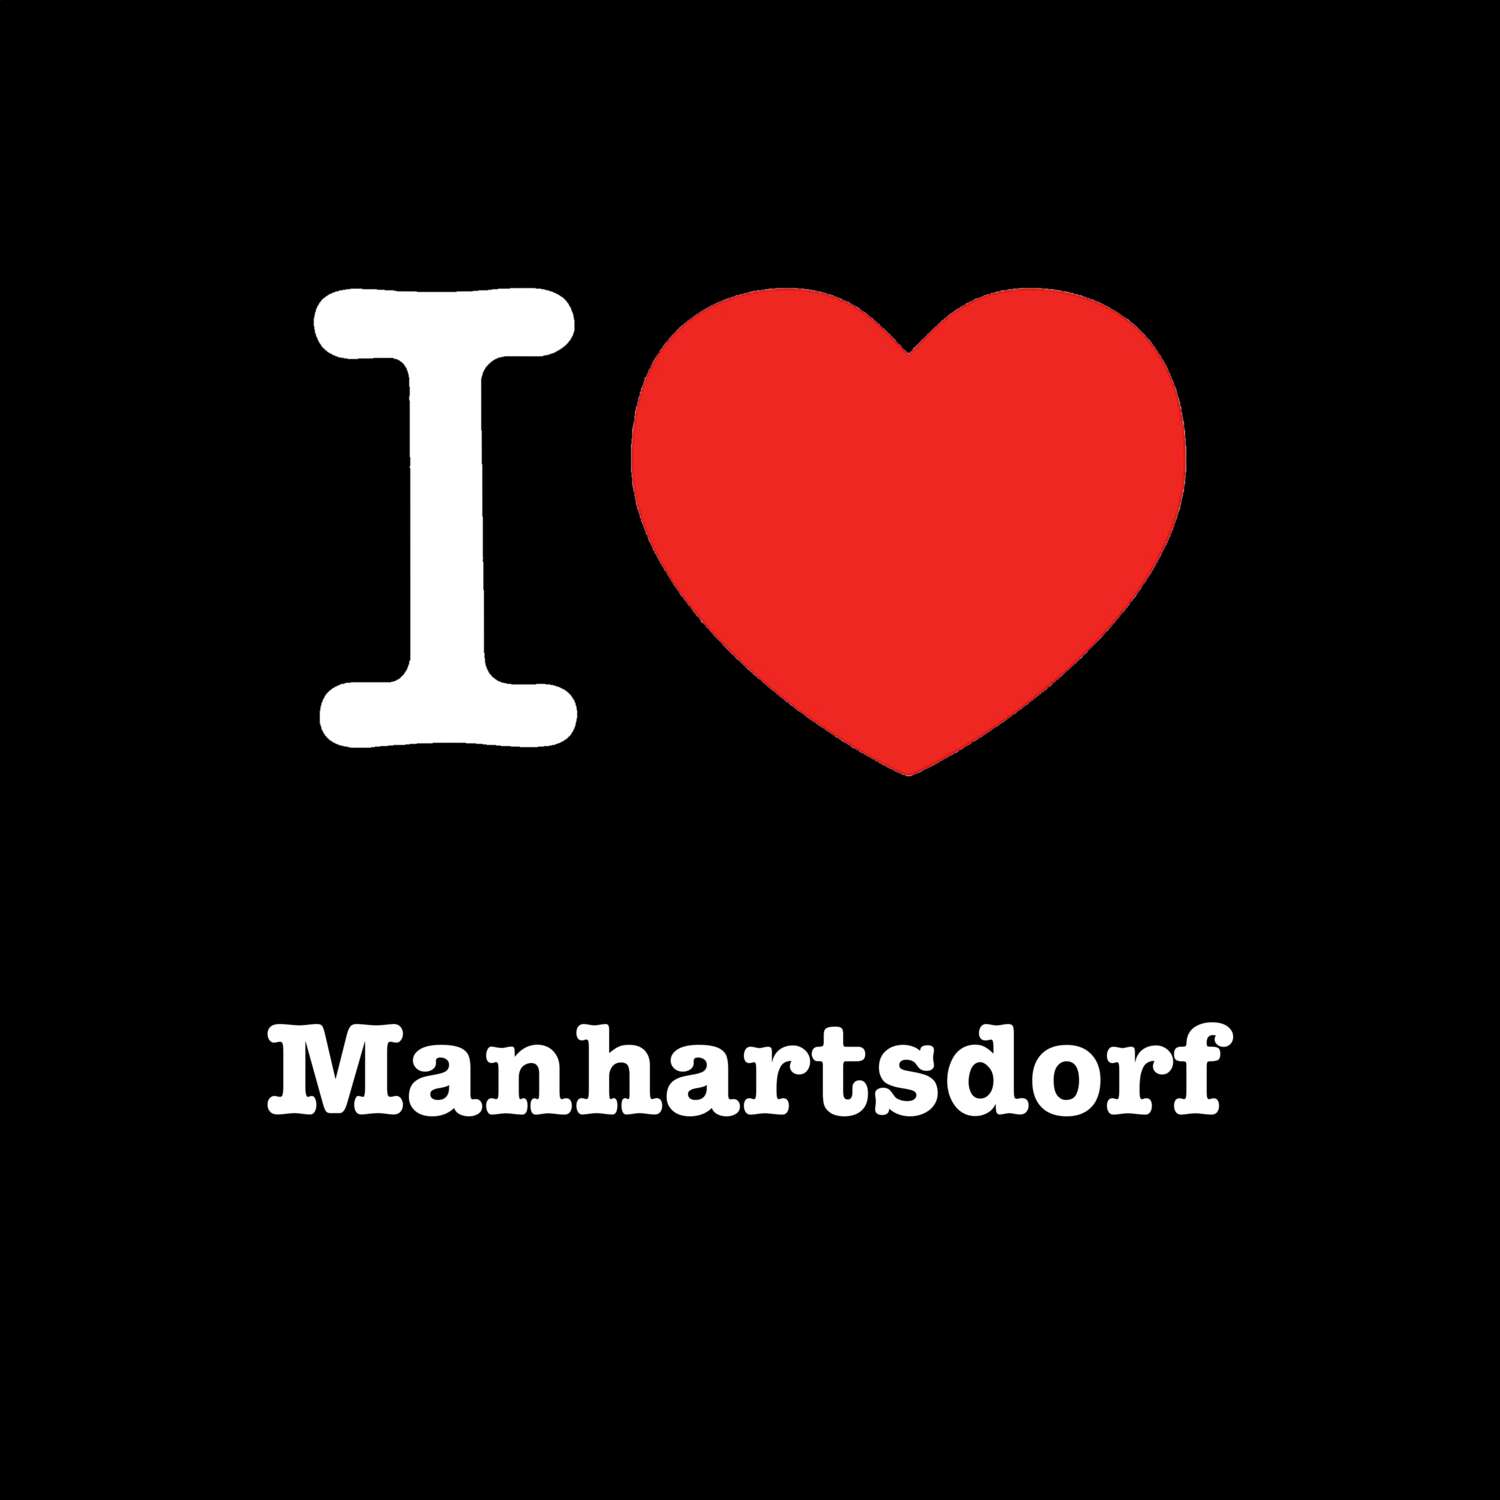 Manhartsdorf T-Shirt »I love«